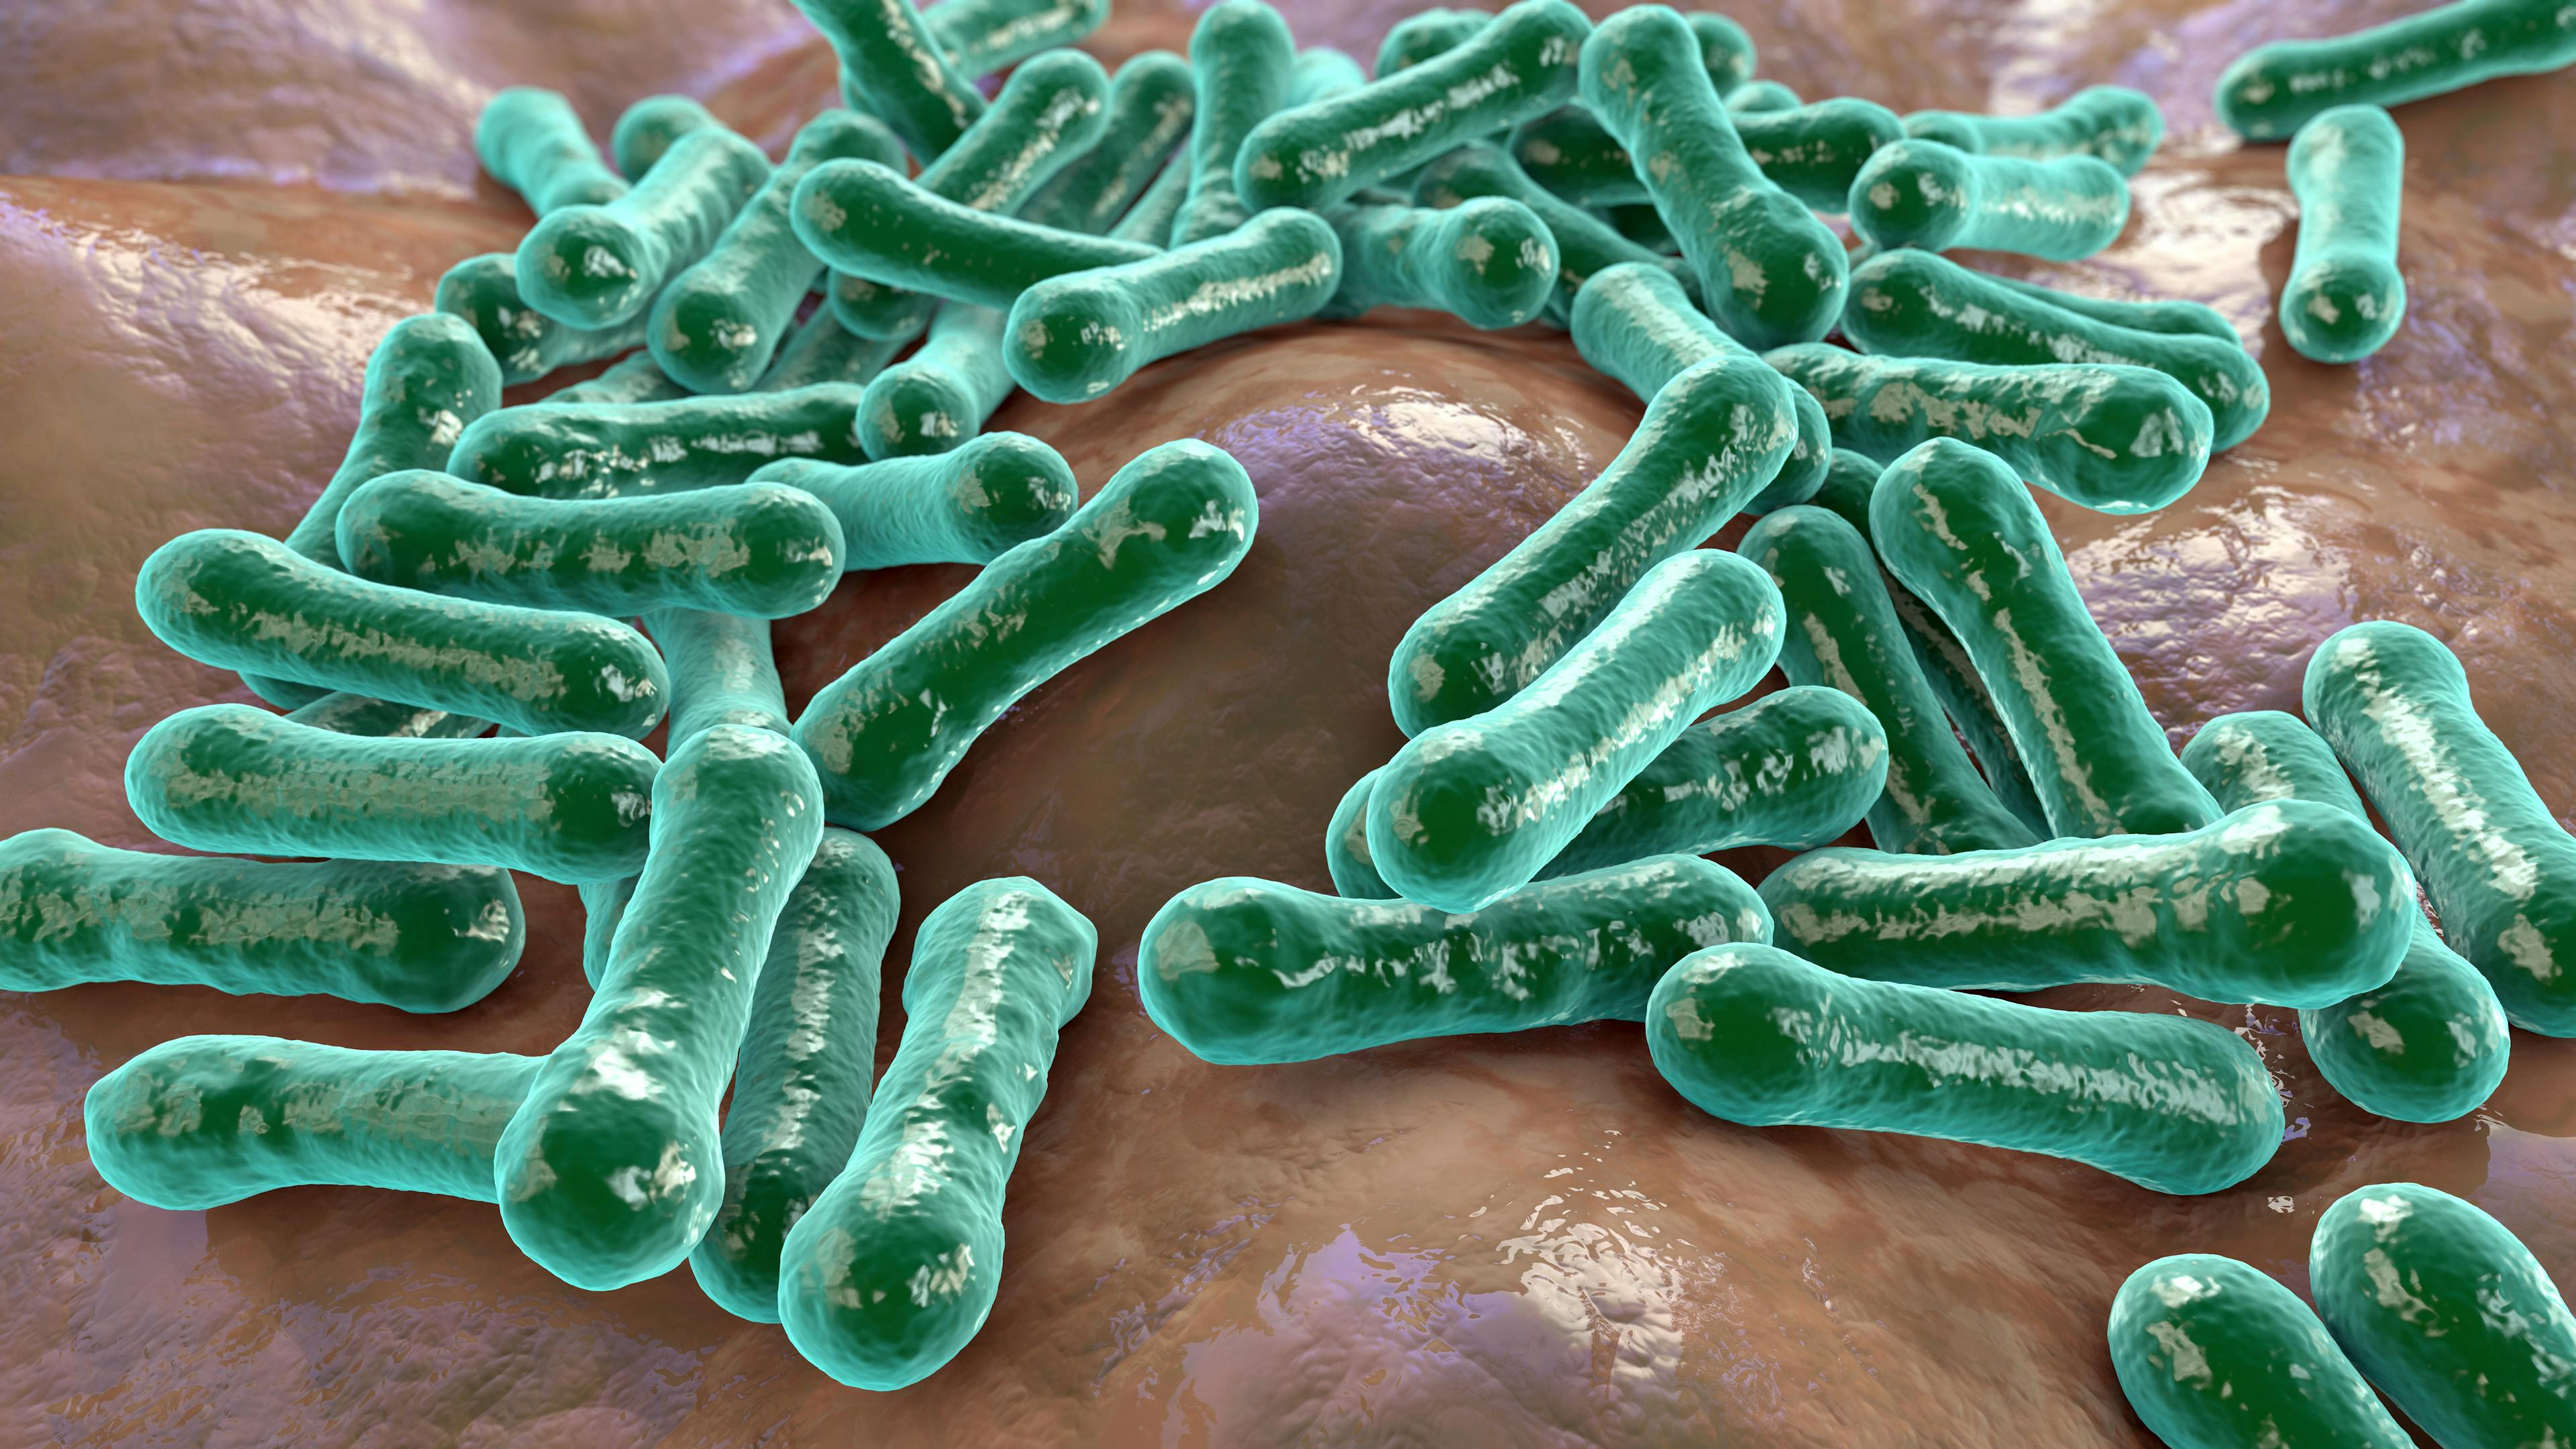 Bacteria Clostridioides difficile | Image Credit: Dr_Microbe - stock.adobe.com